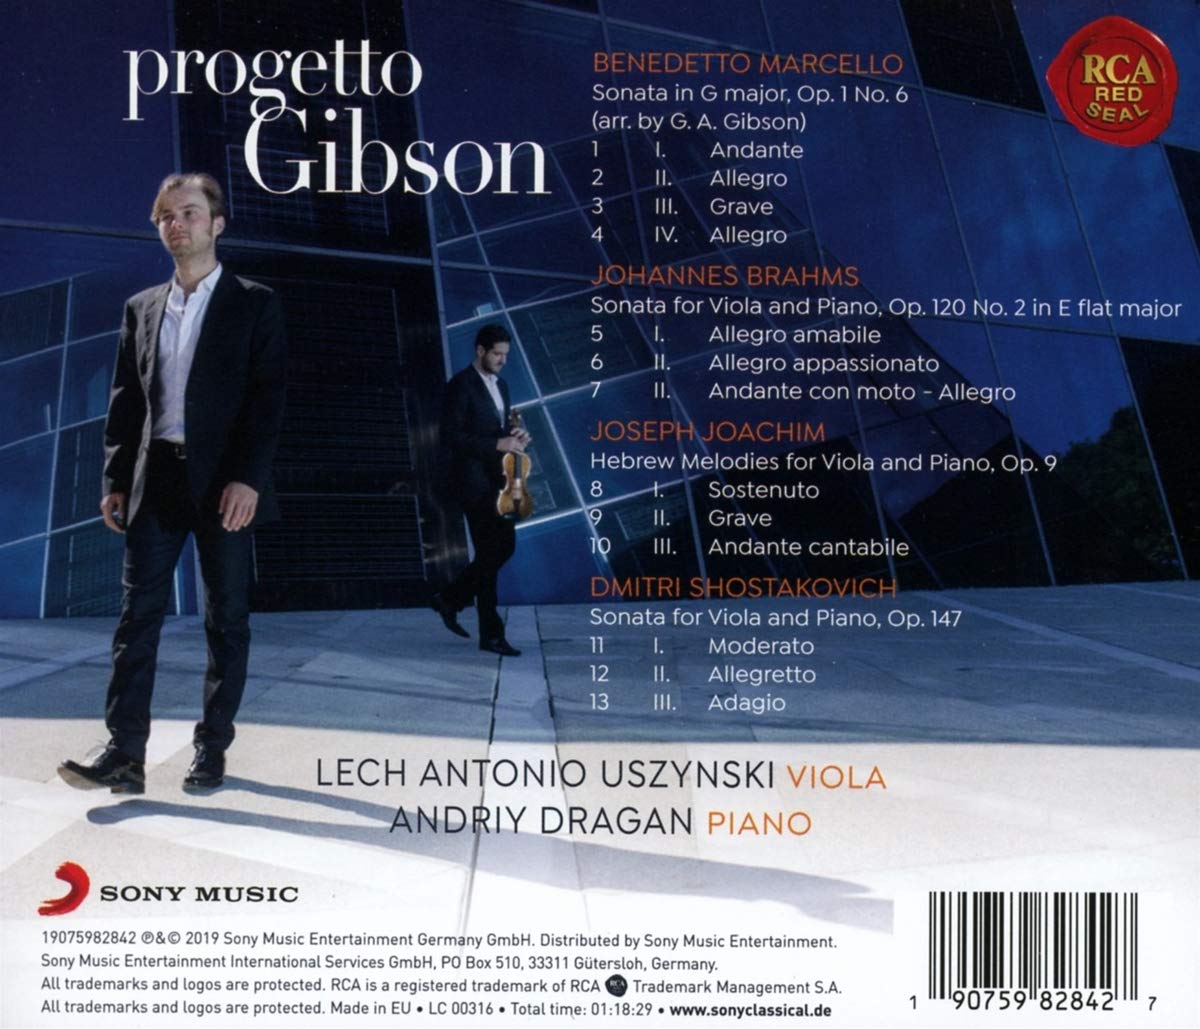 Lech Antonio Uszynski 깁슨 프로젝트 - 전설의 스트라디바리 비올라 (Progetto Gibson)